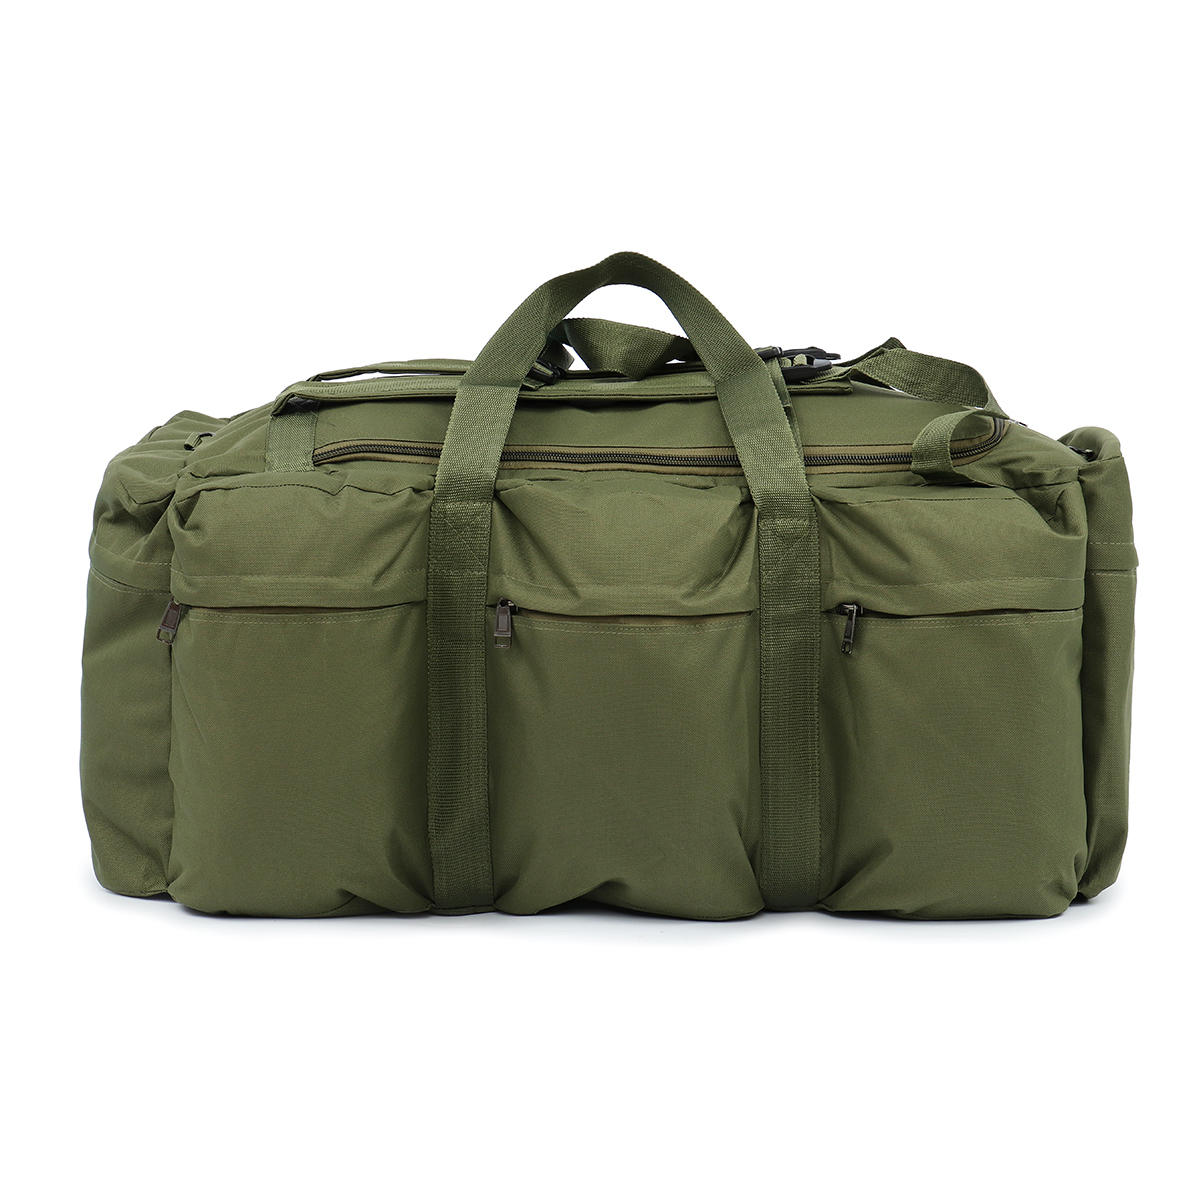 90L Outdoor Travel Large Duffle Luggage Bag Waterproof Camping Hiking Handbag Backpack Rucksack